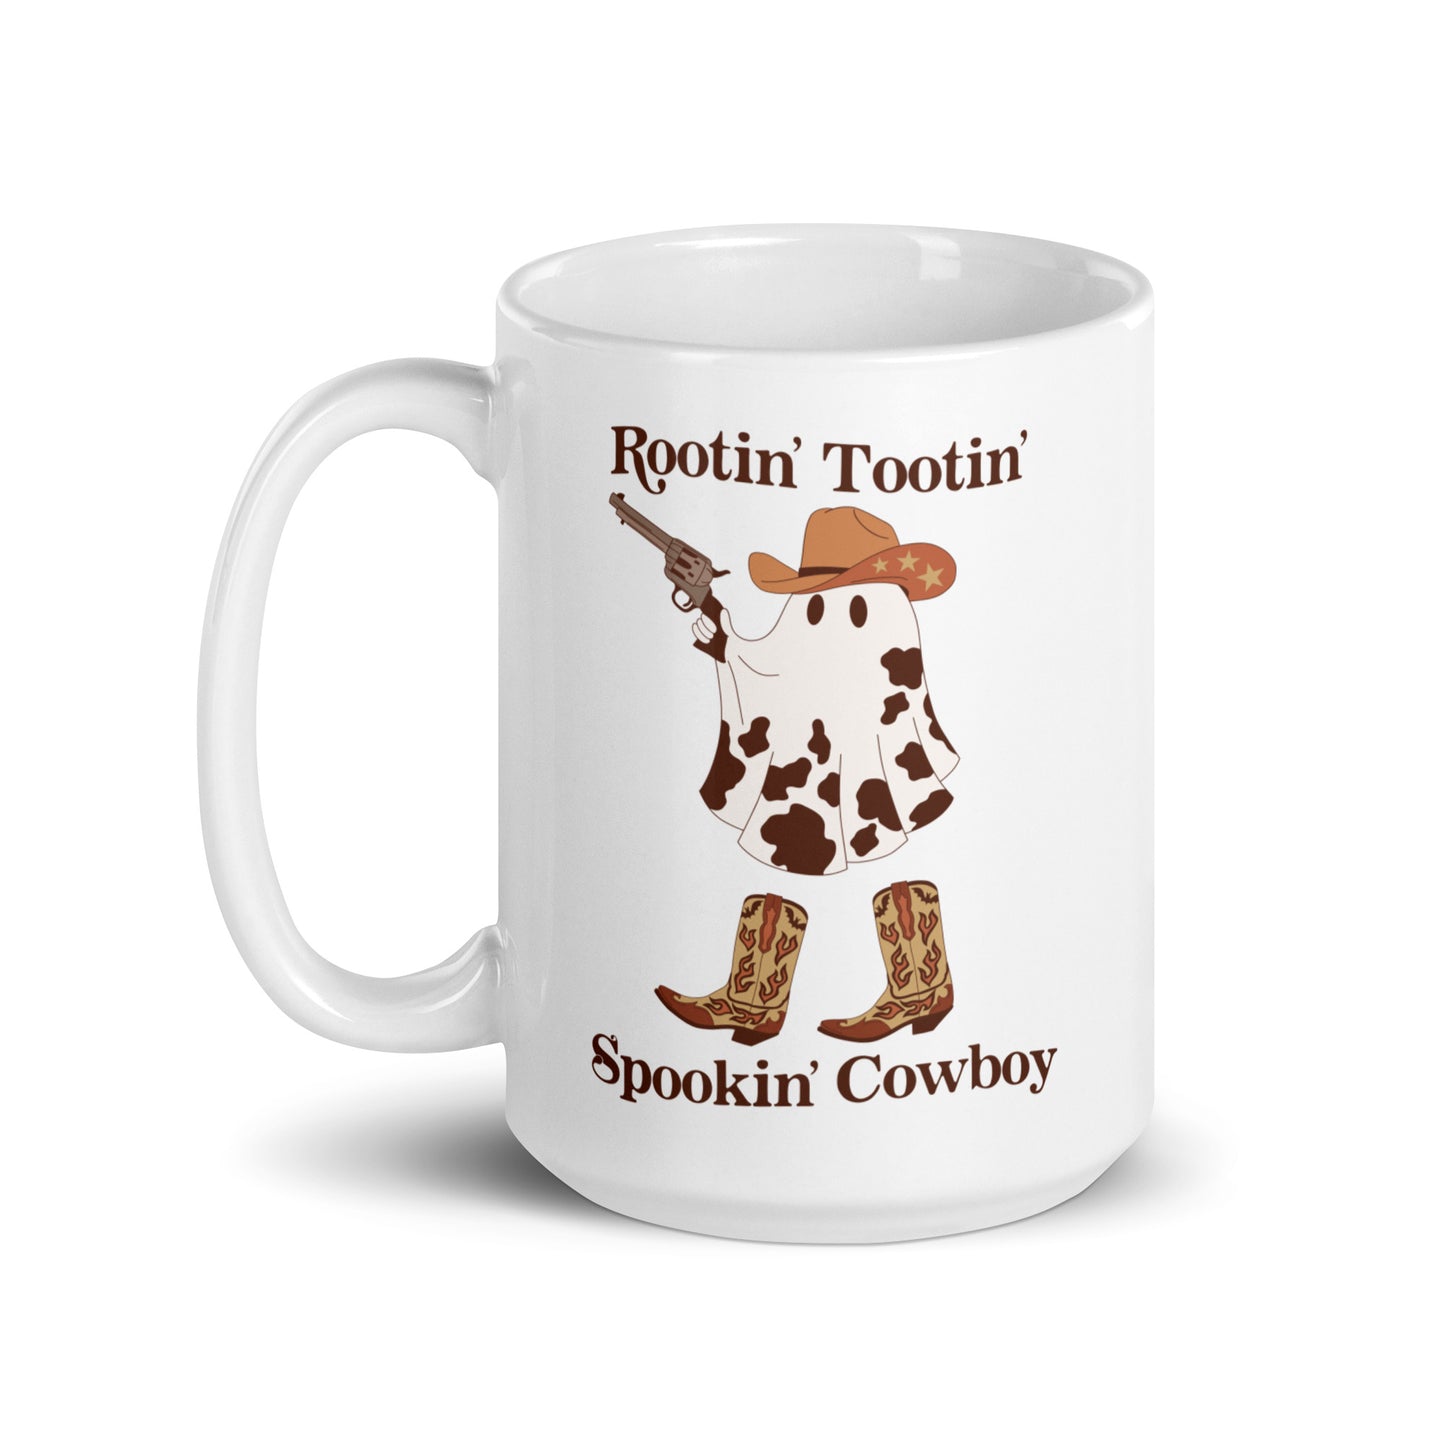 Rootin' Tootin' Spookin' Cowboy glossy mug